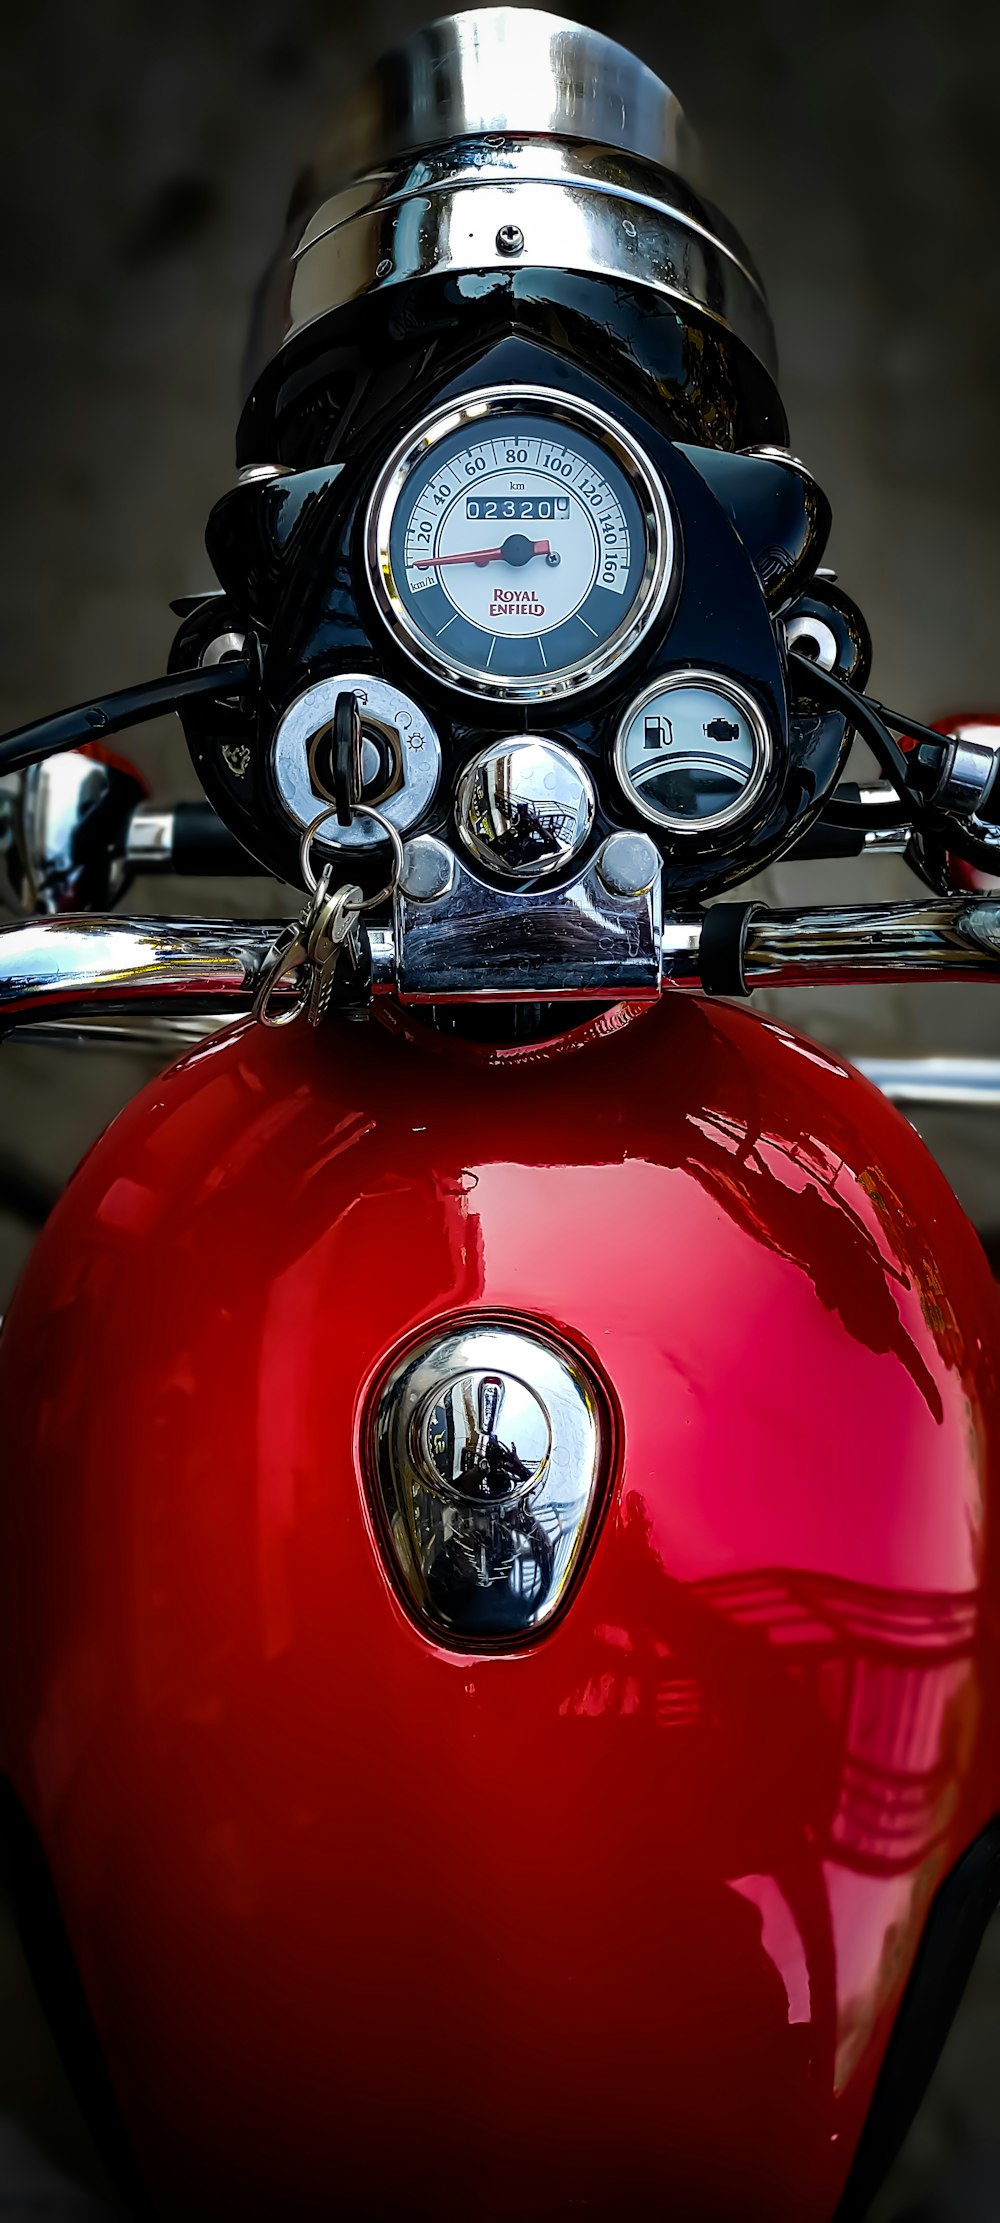 Glanz Motorrad Tacho Nahaufnahme mit roten Nadel., Stock Bild